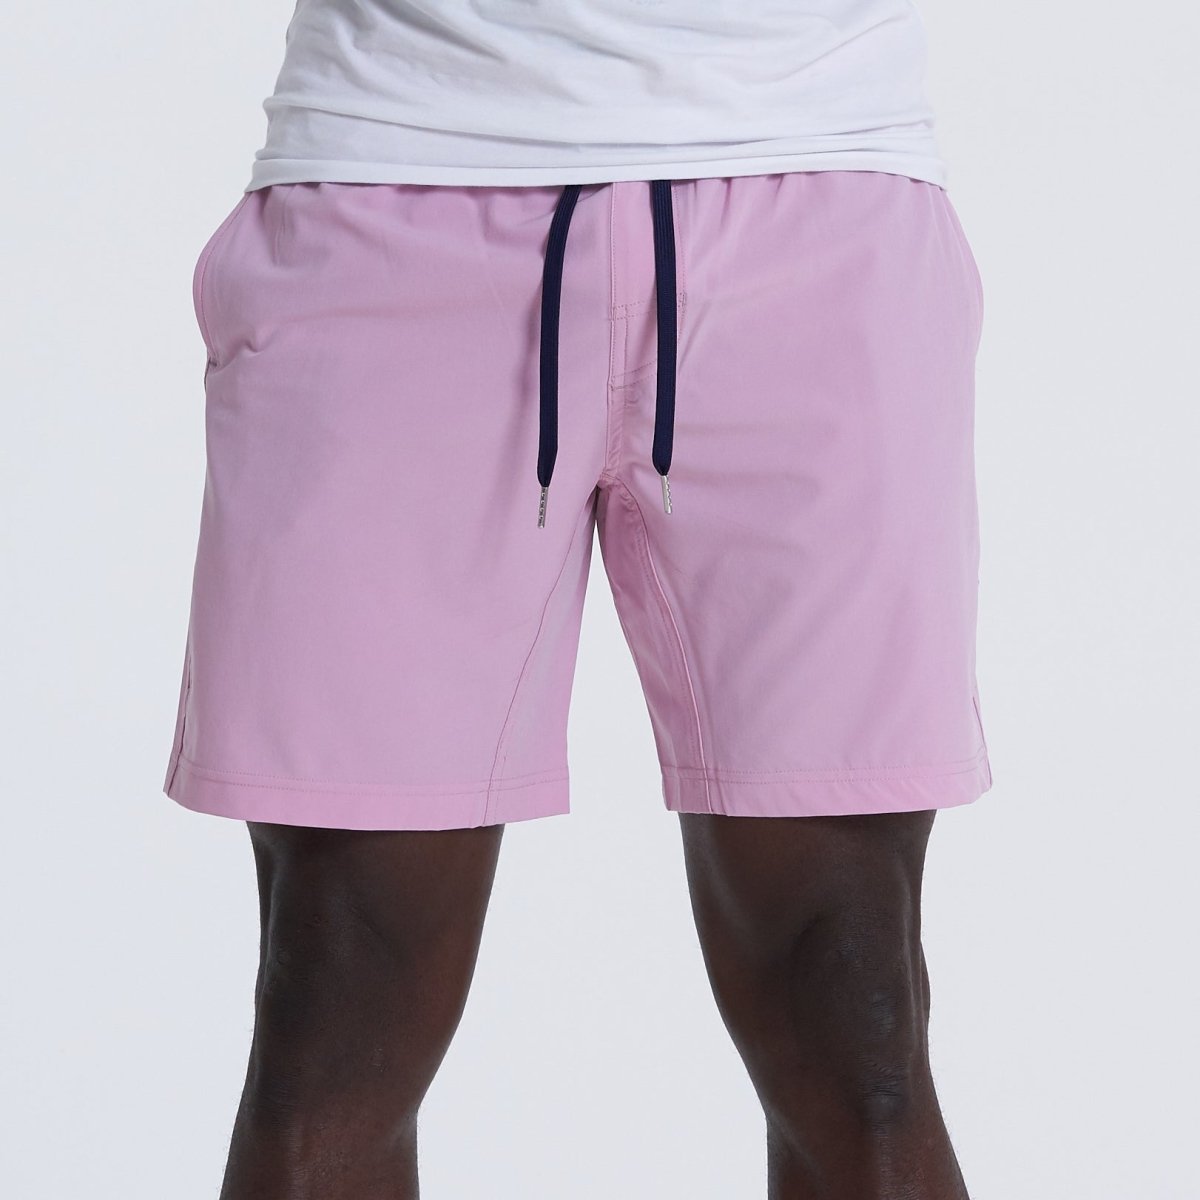 Fashion Killa 5" - Dusty Pink Shorts - Bamboo Ave. - Men's Shorts